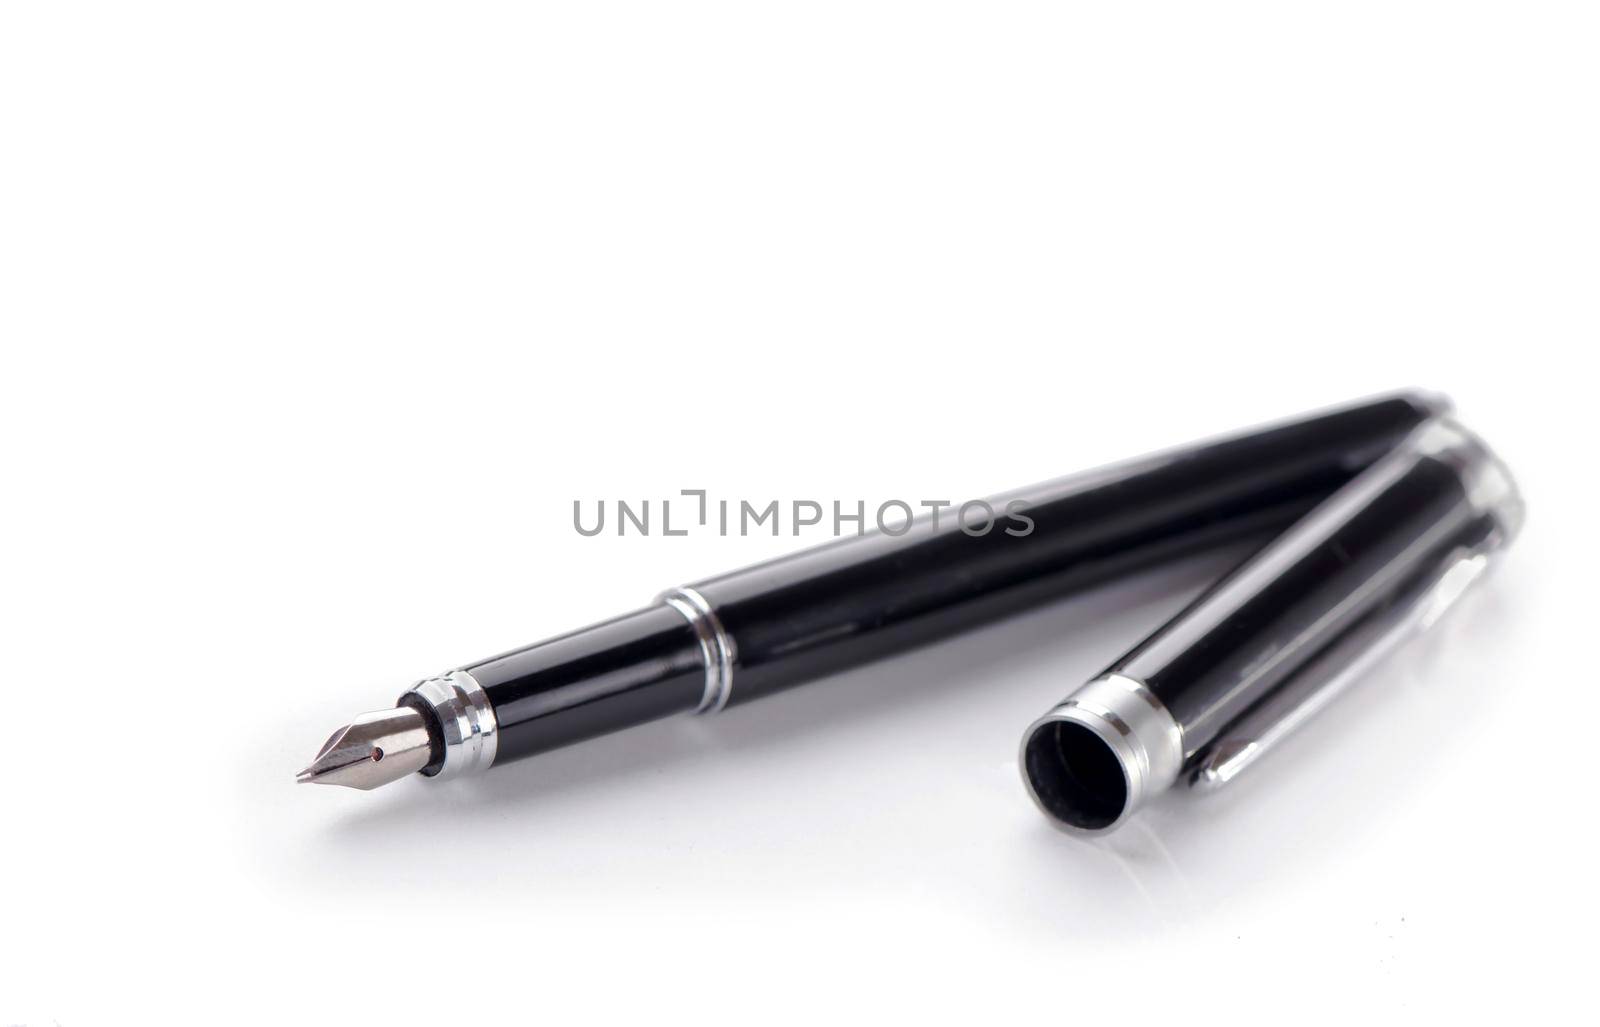 Close op elegant black fountain pen on white background